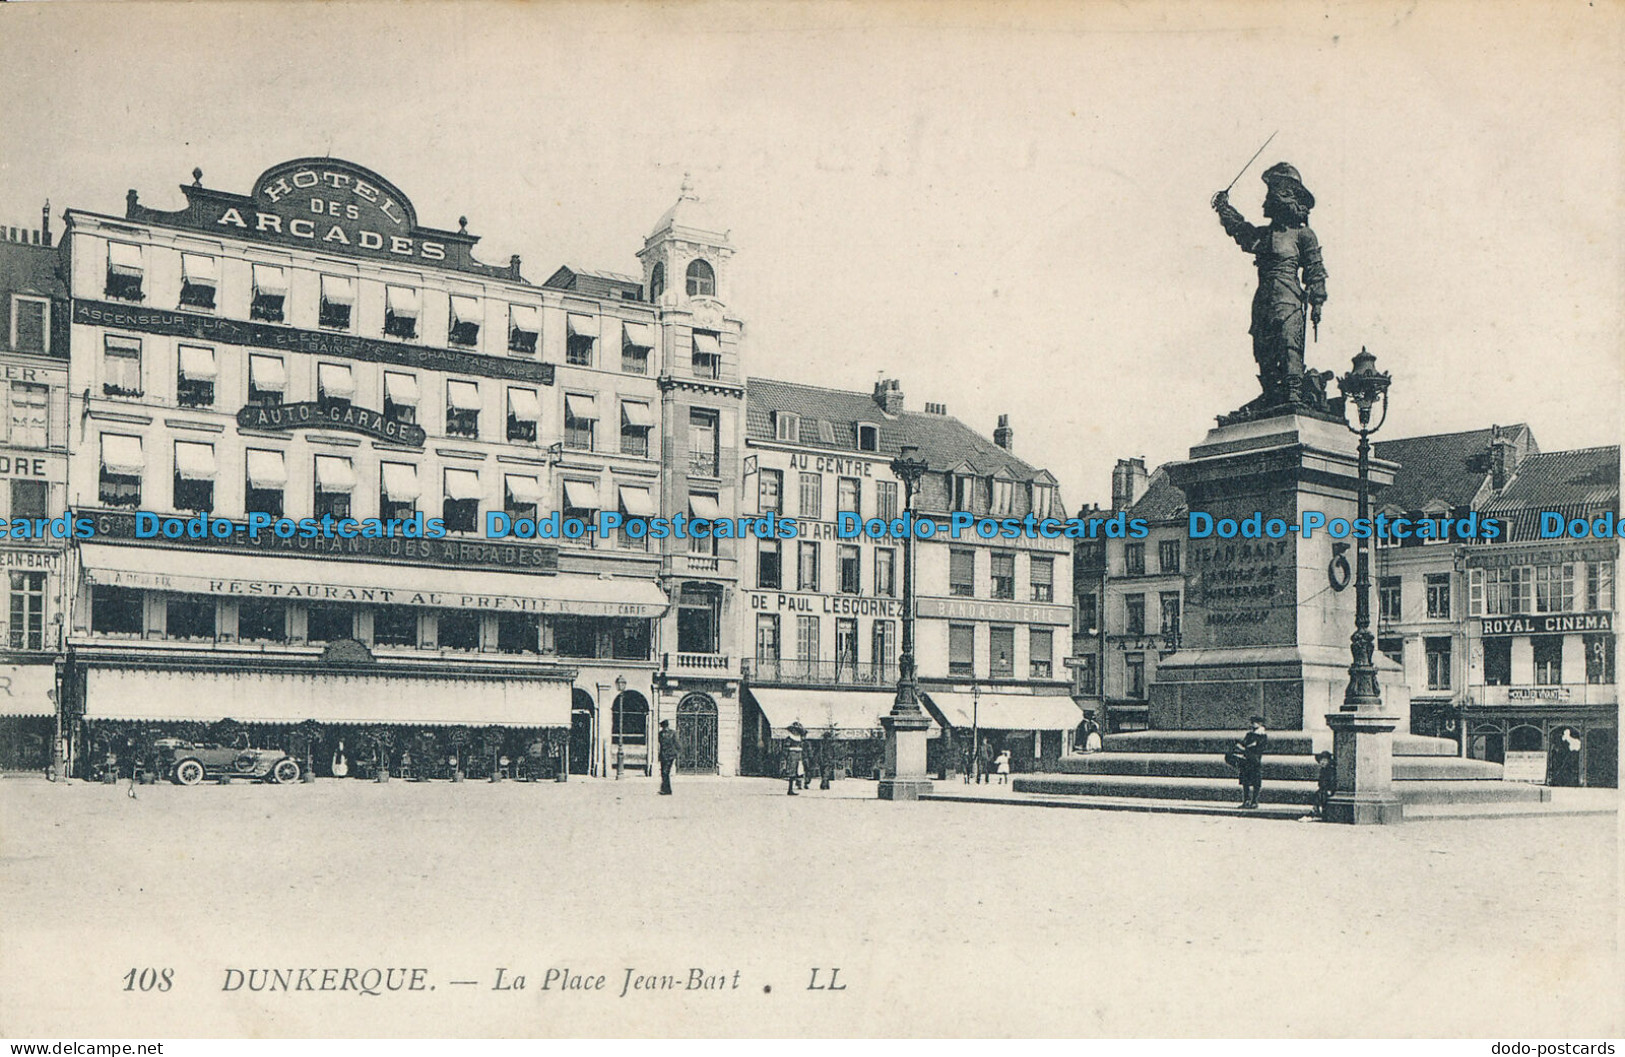 R092515 Dunkerque. La Place Jean Bart. LL. No 108 - World